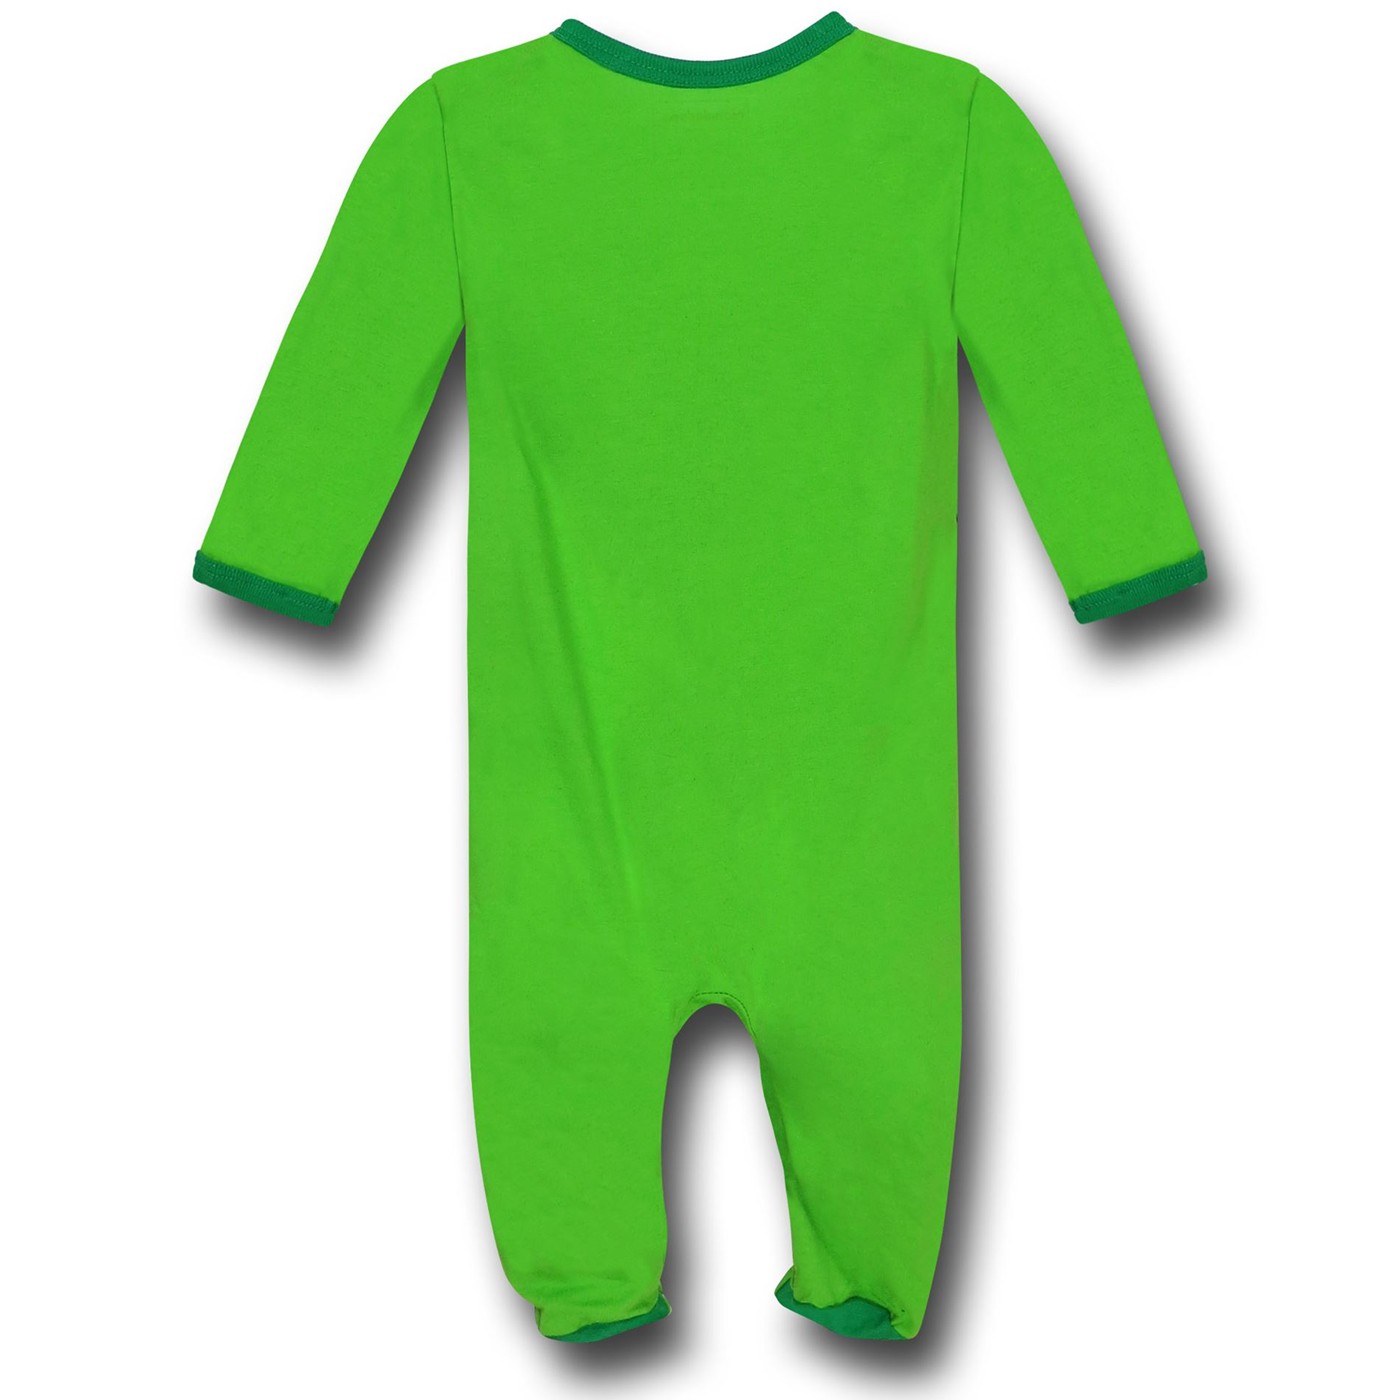 TMNT Infant Costume Body Snapsuit